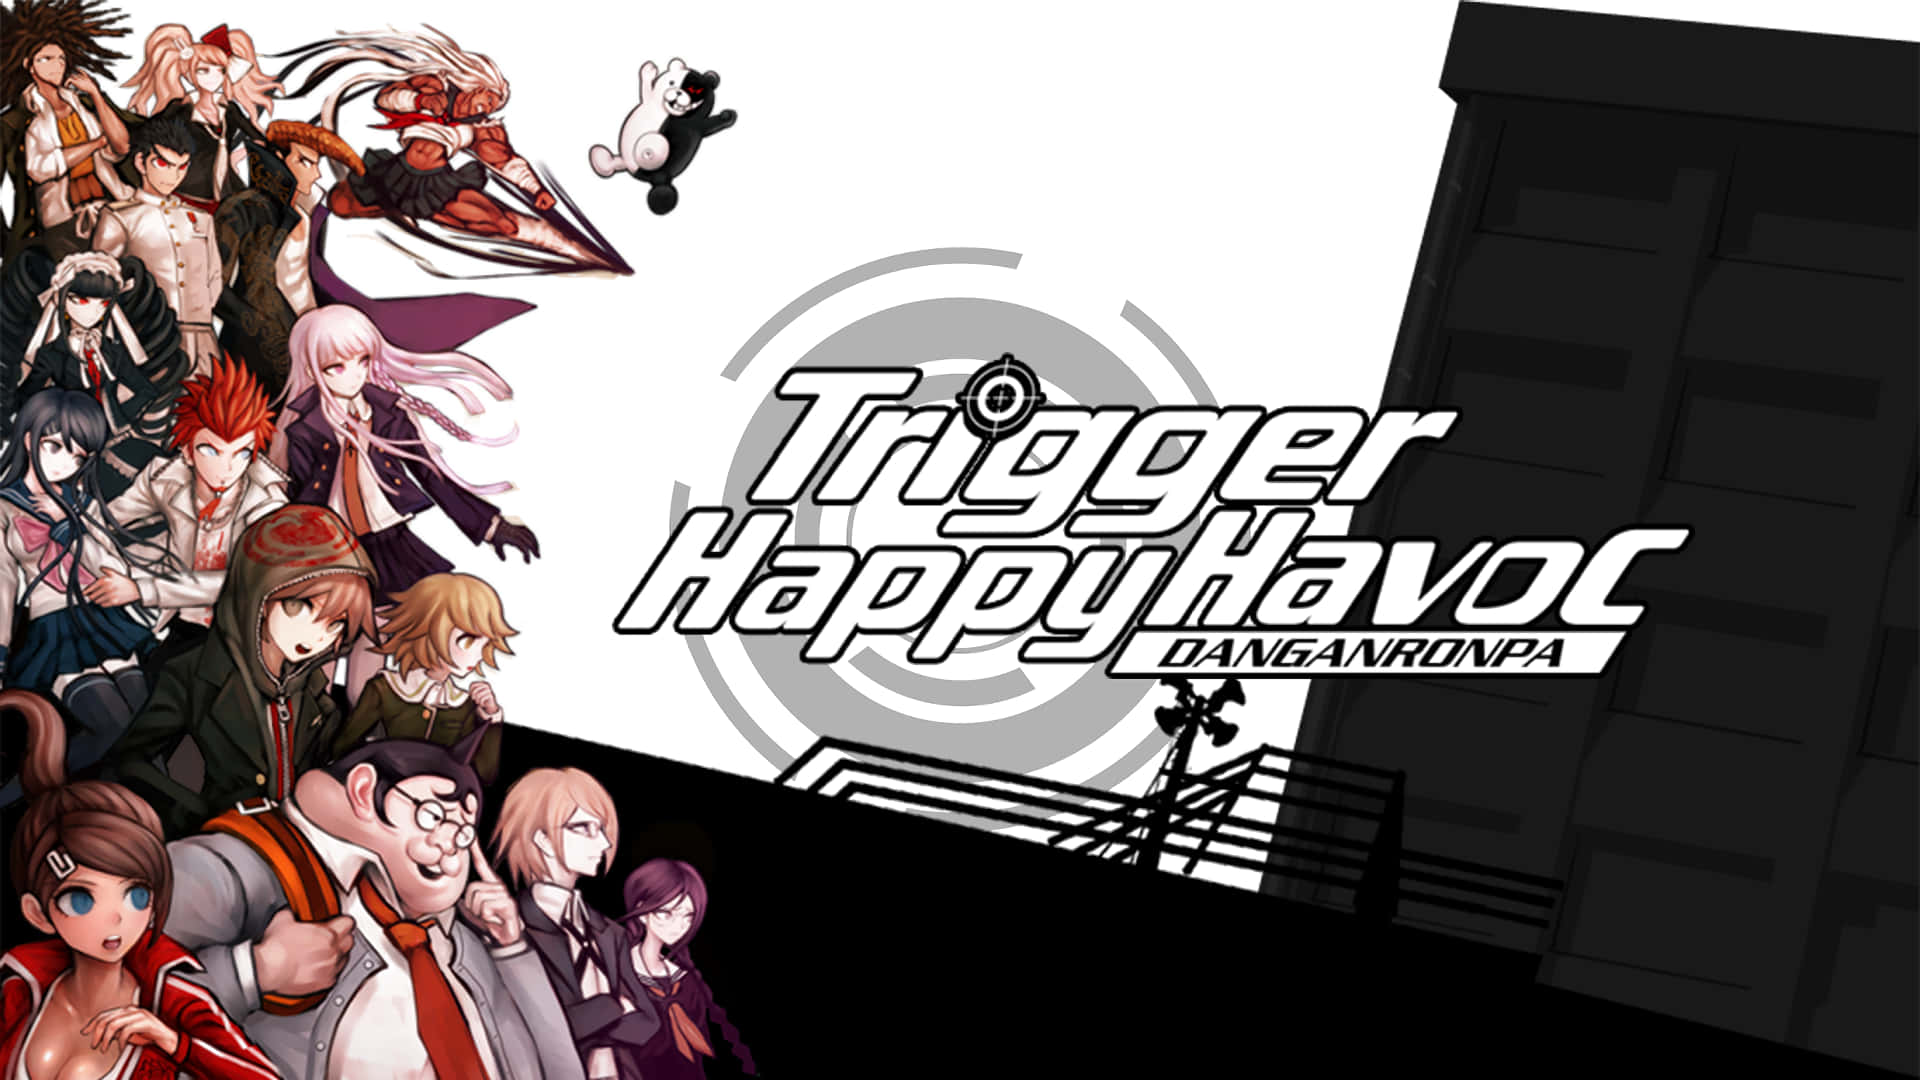 Danganronpa Trigger Happy Havoc Characters Wallpaper